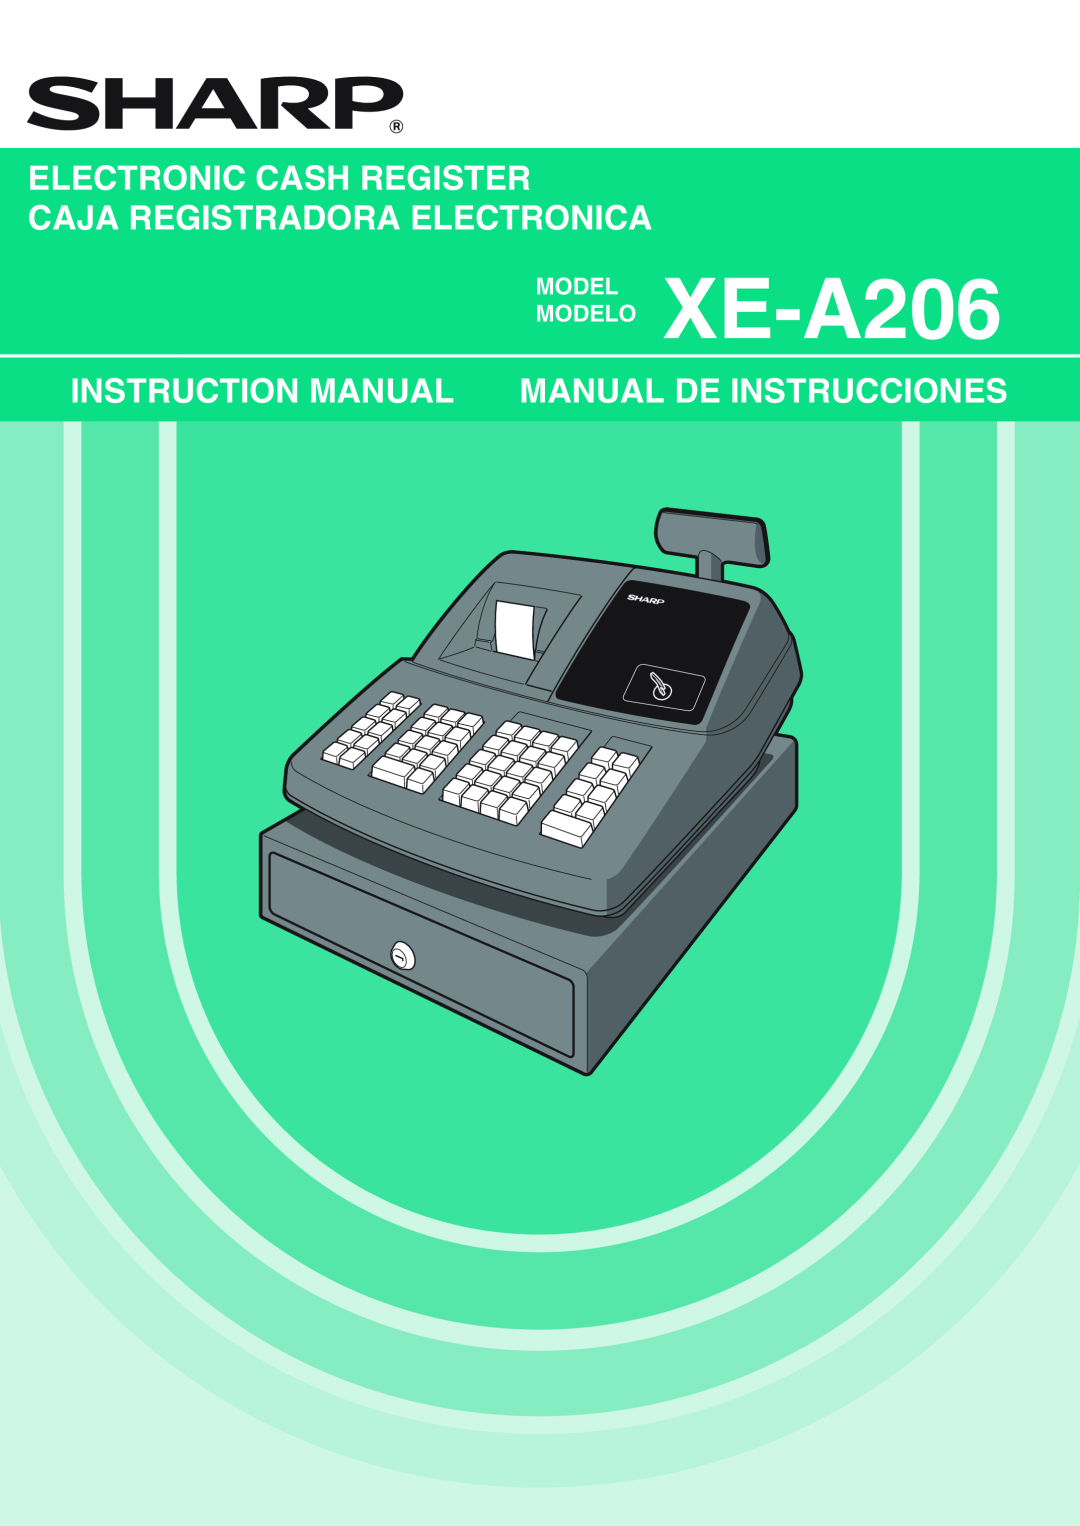 Sharp TINSZ2600RCZZ instruction manual Electronic Cash Register Caja Registradora Electronica, MODEL MODELO XE-A206 